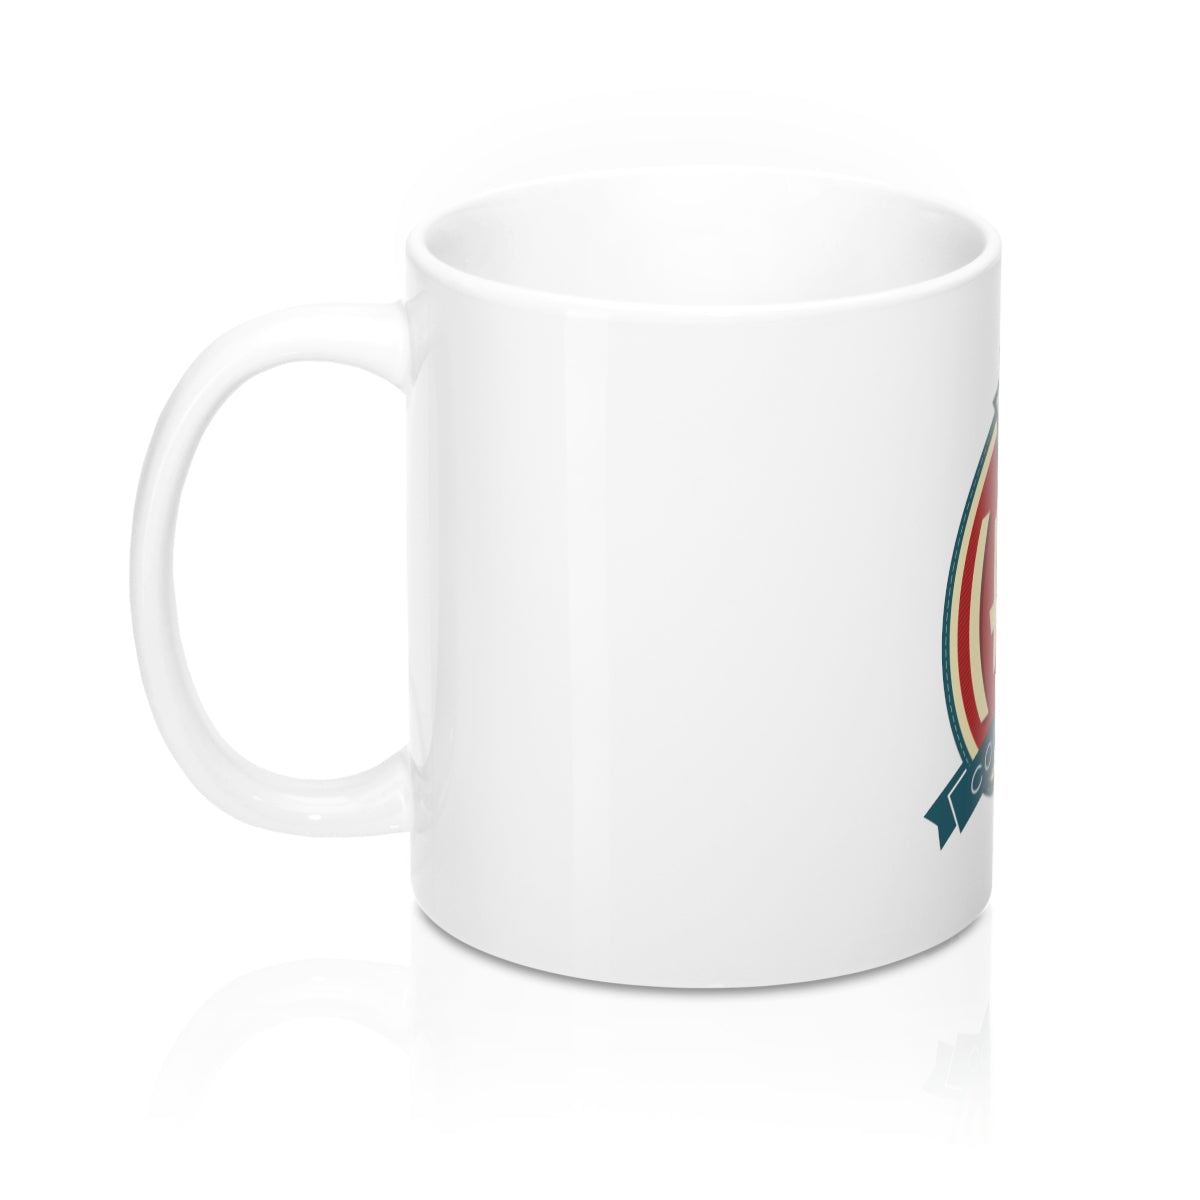 Republican Coffee Coffee Mug